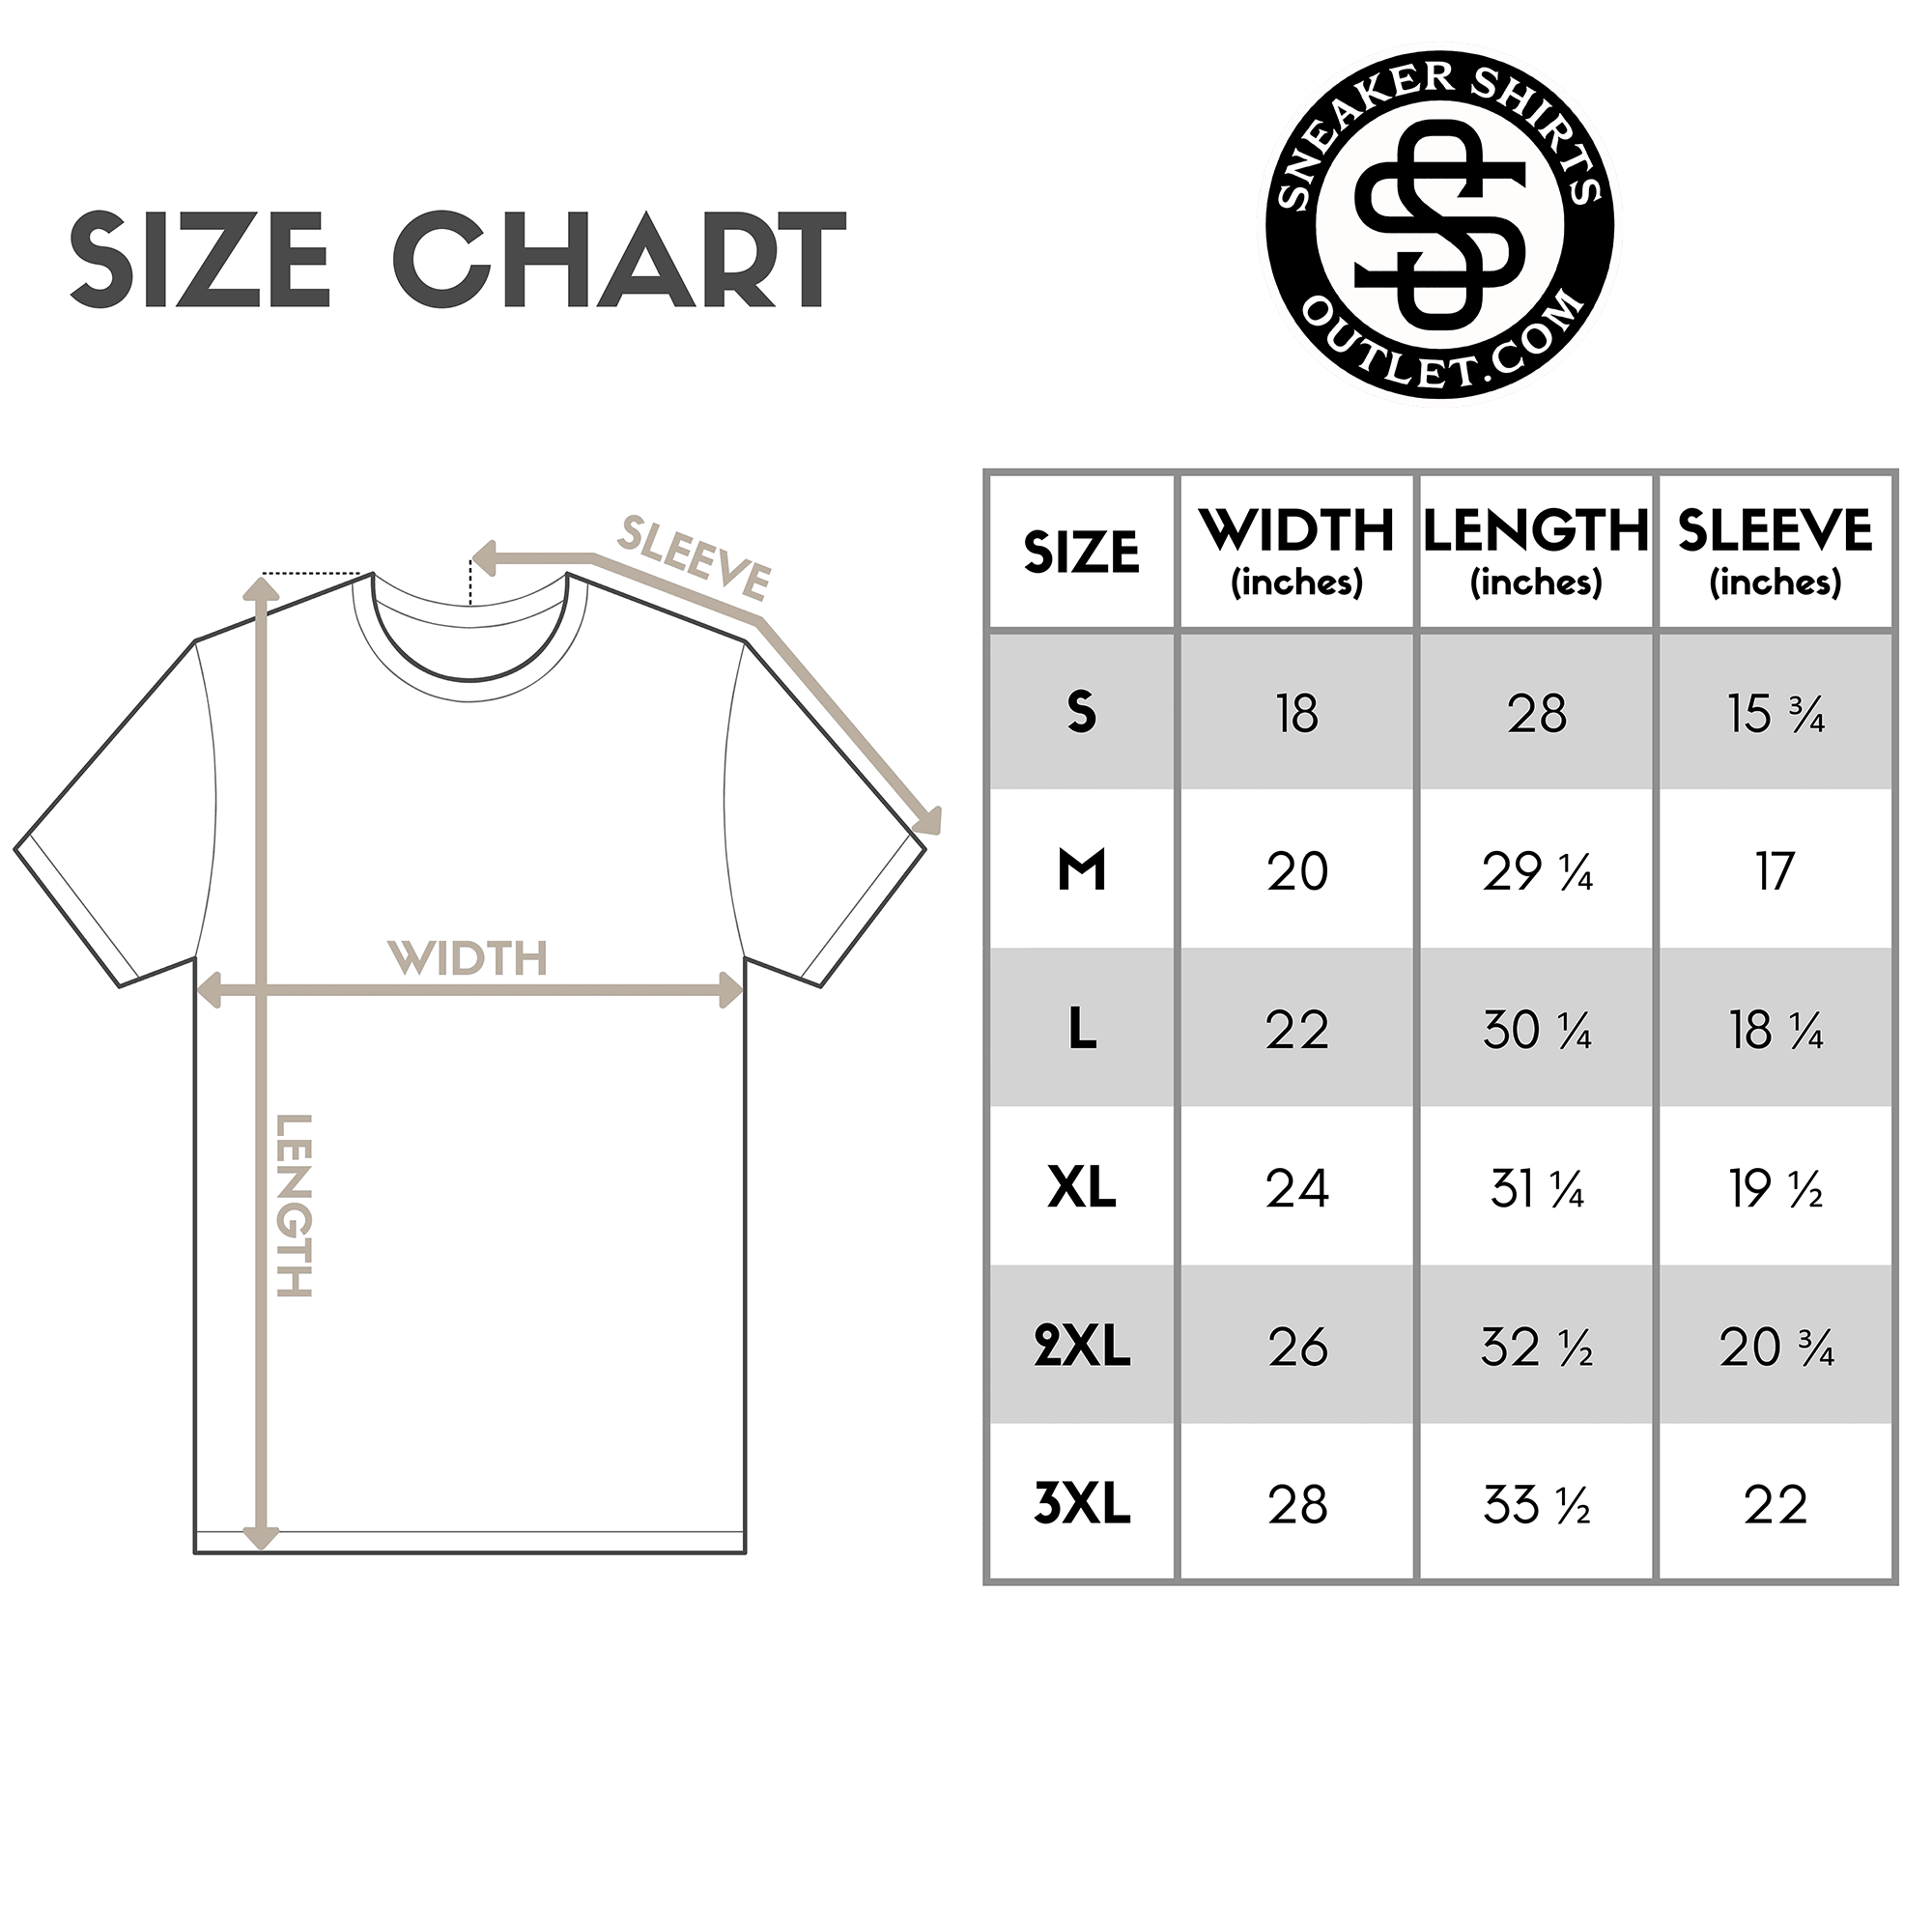 23 Drip Shirt Jordan 1s Low Snakeskin Vivid Green size chart photo